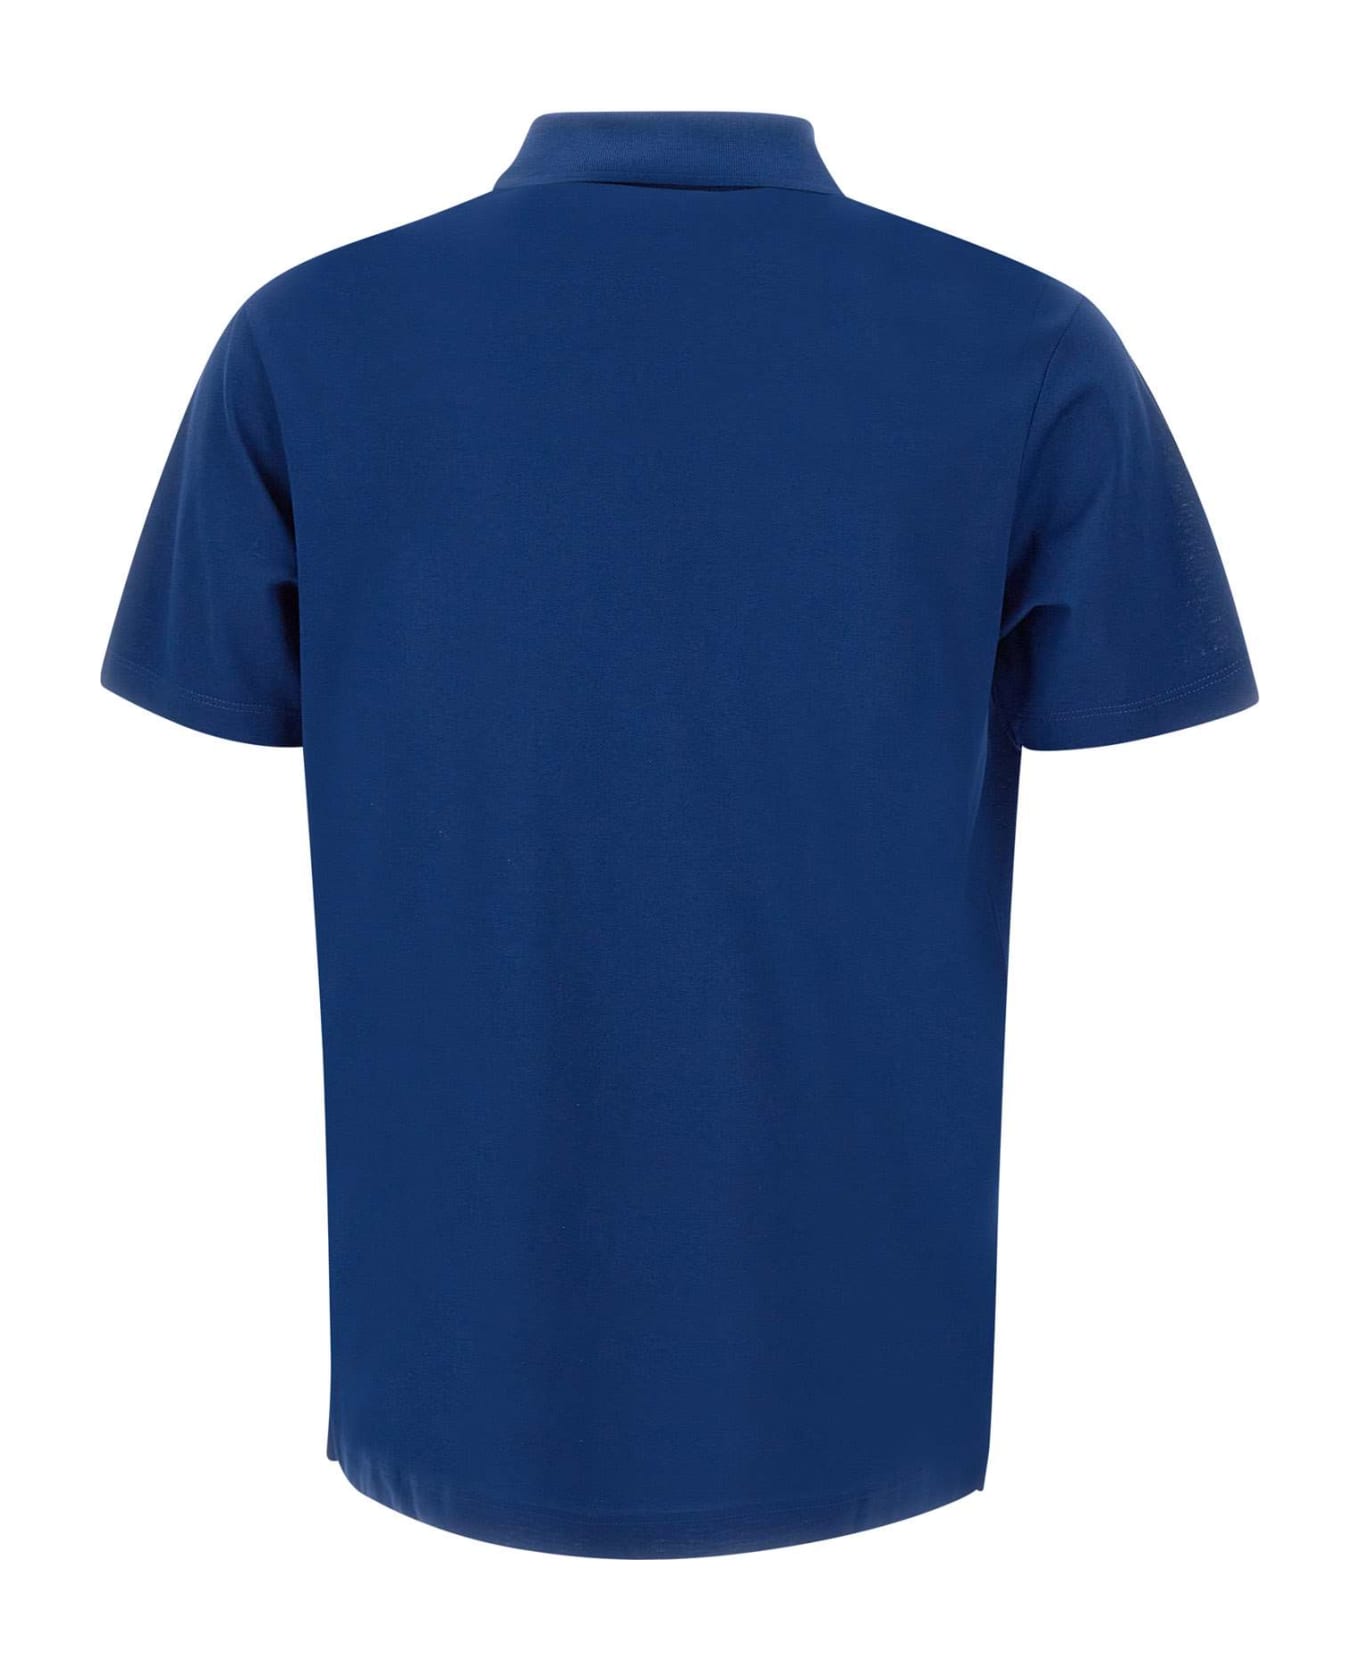 Paul&Shark Cotton Polo Shirt - BLUE ポロシャツ